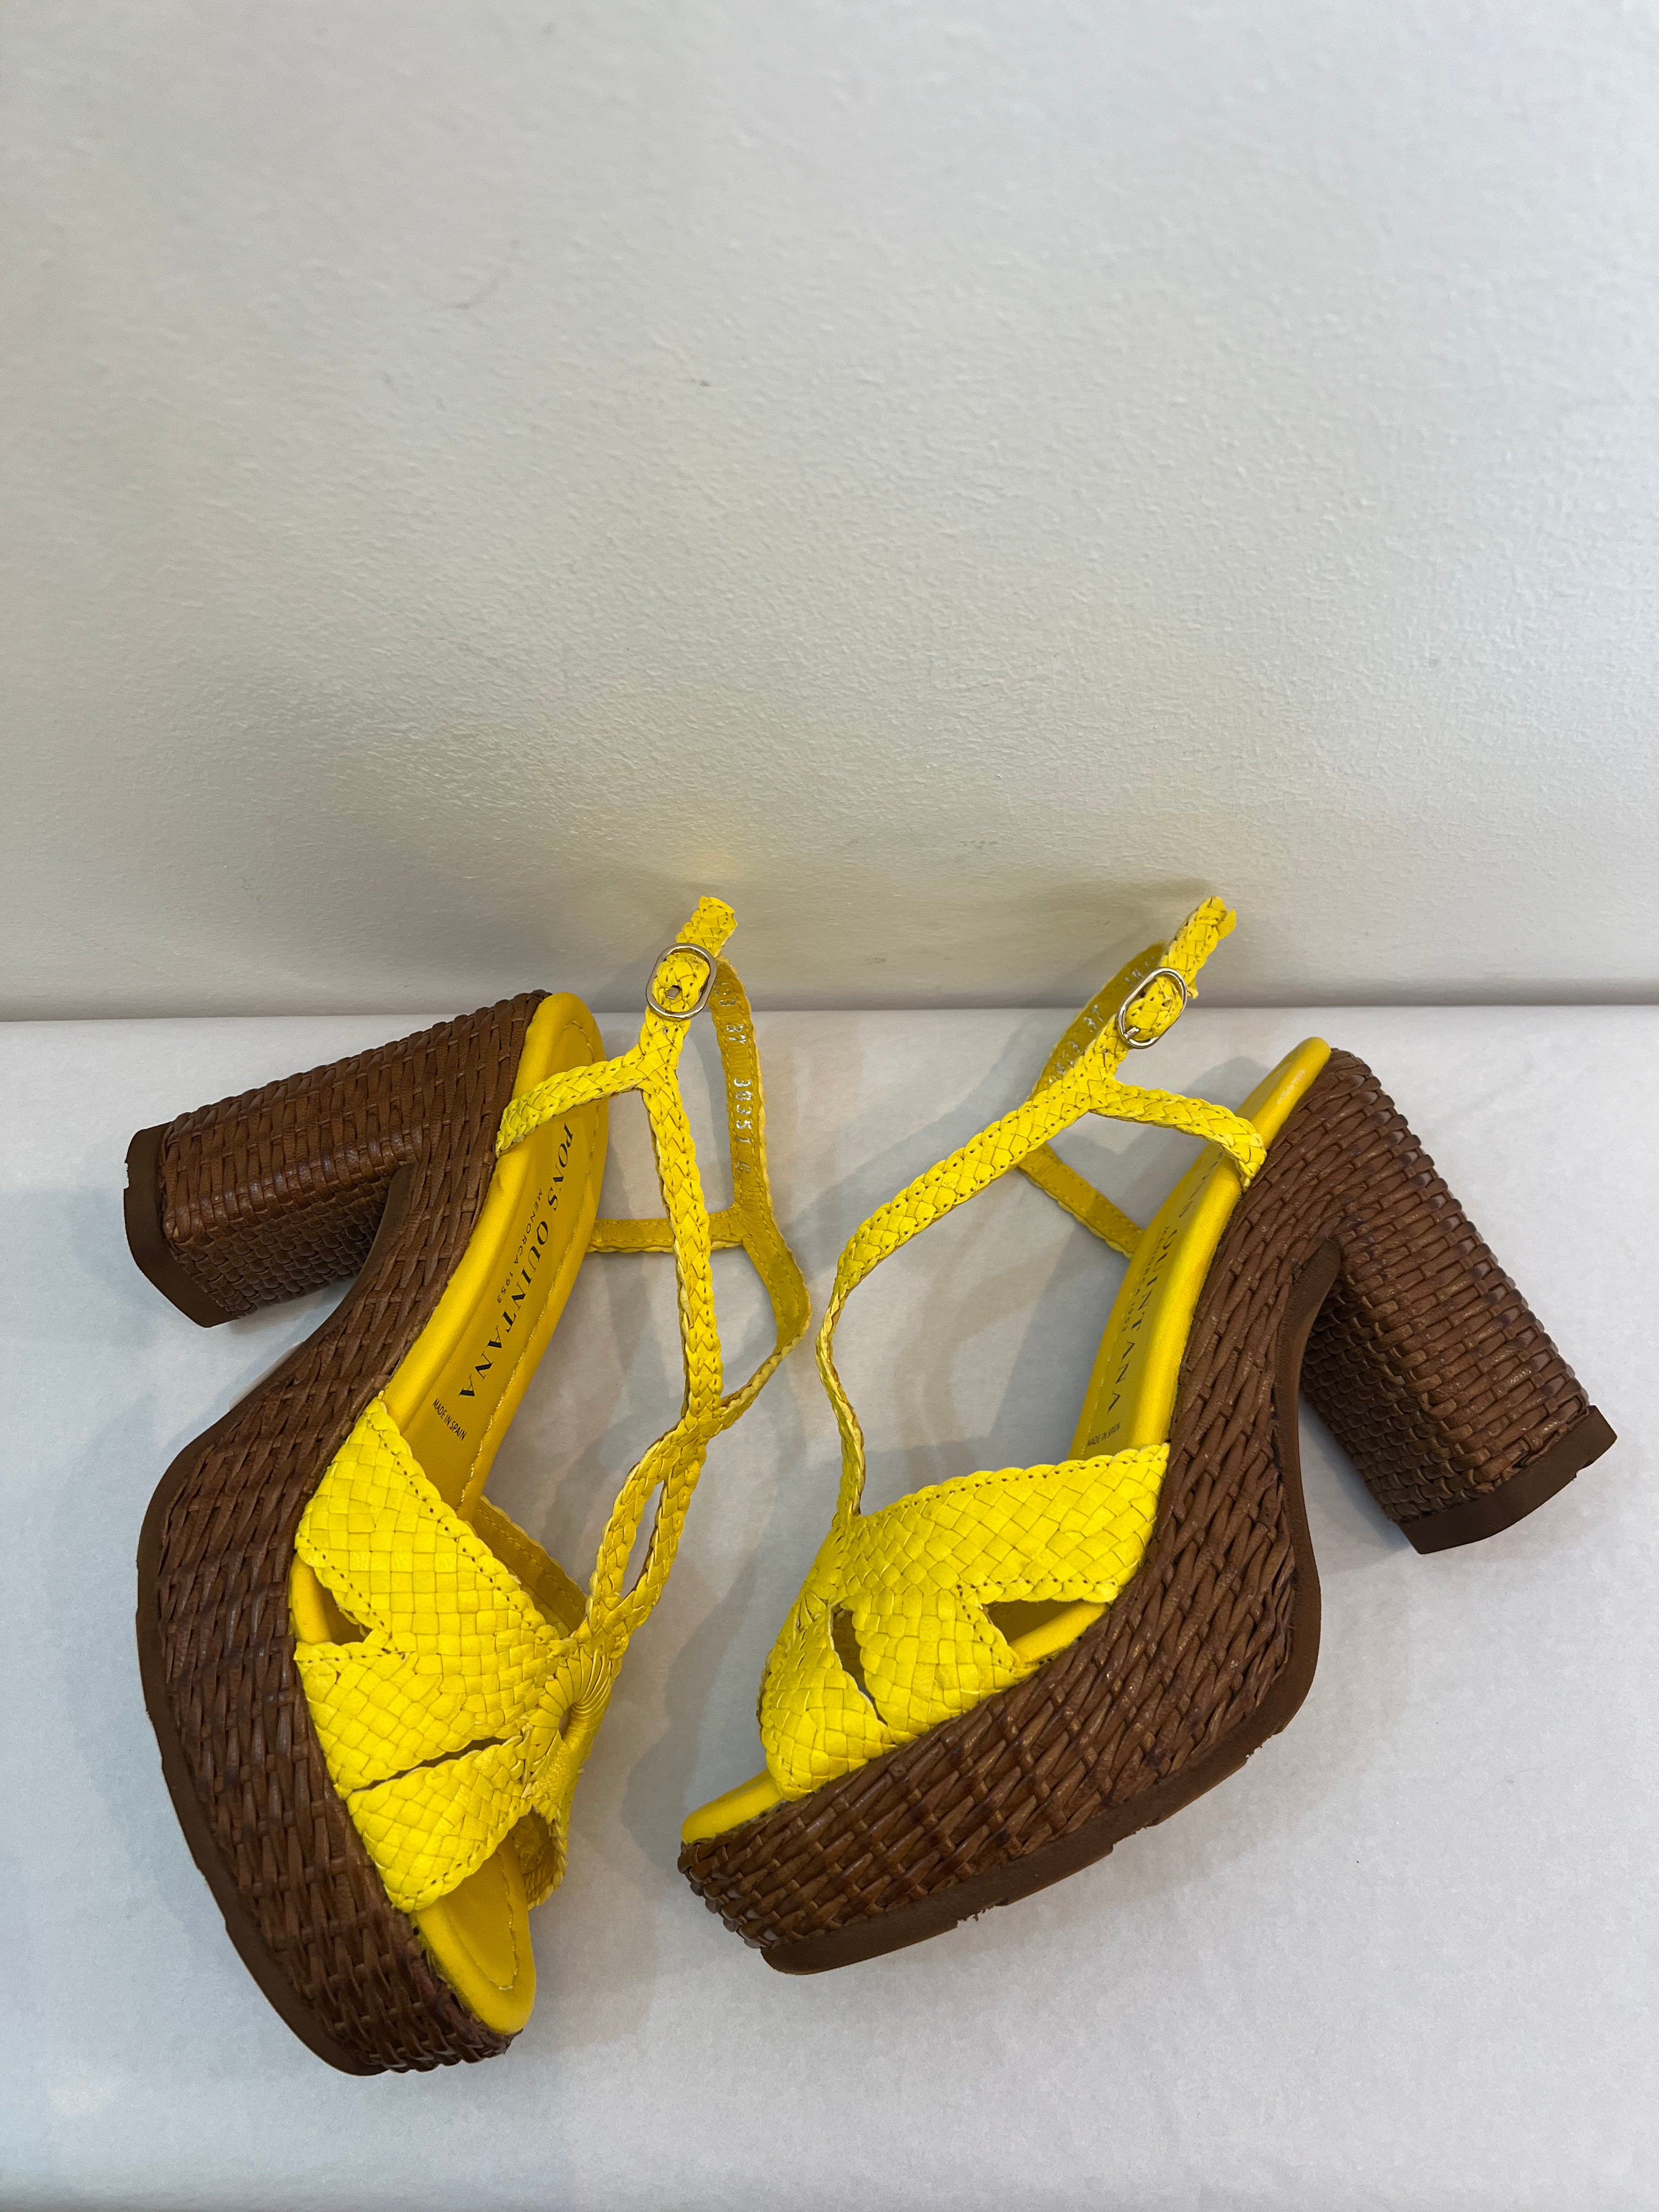 Hetre Alresford Hampshire Shoe Store Pons Quintana Yellow Woven Platform Sandal